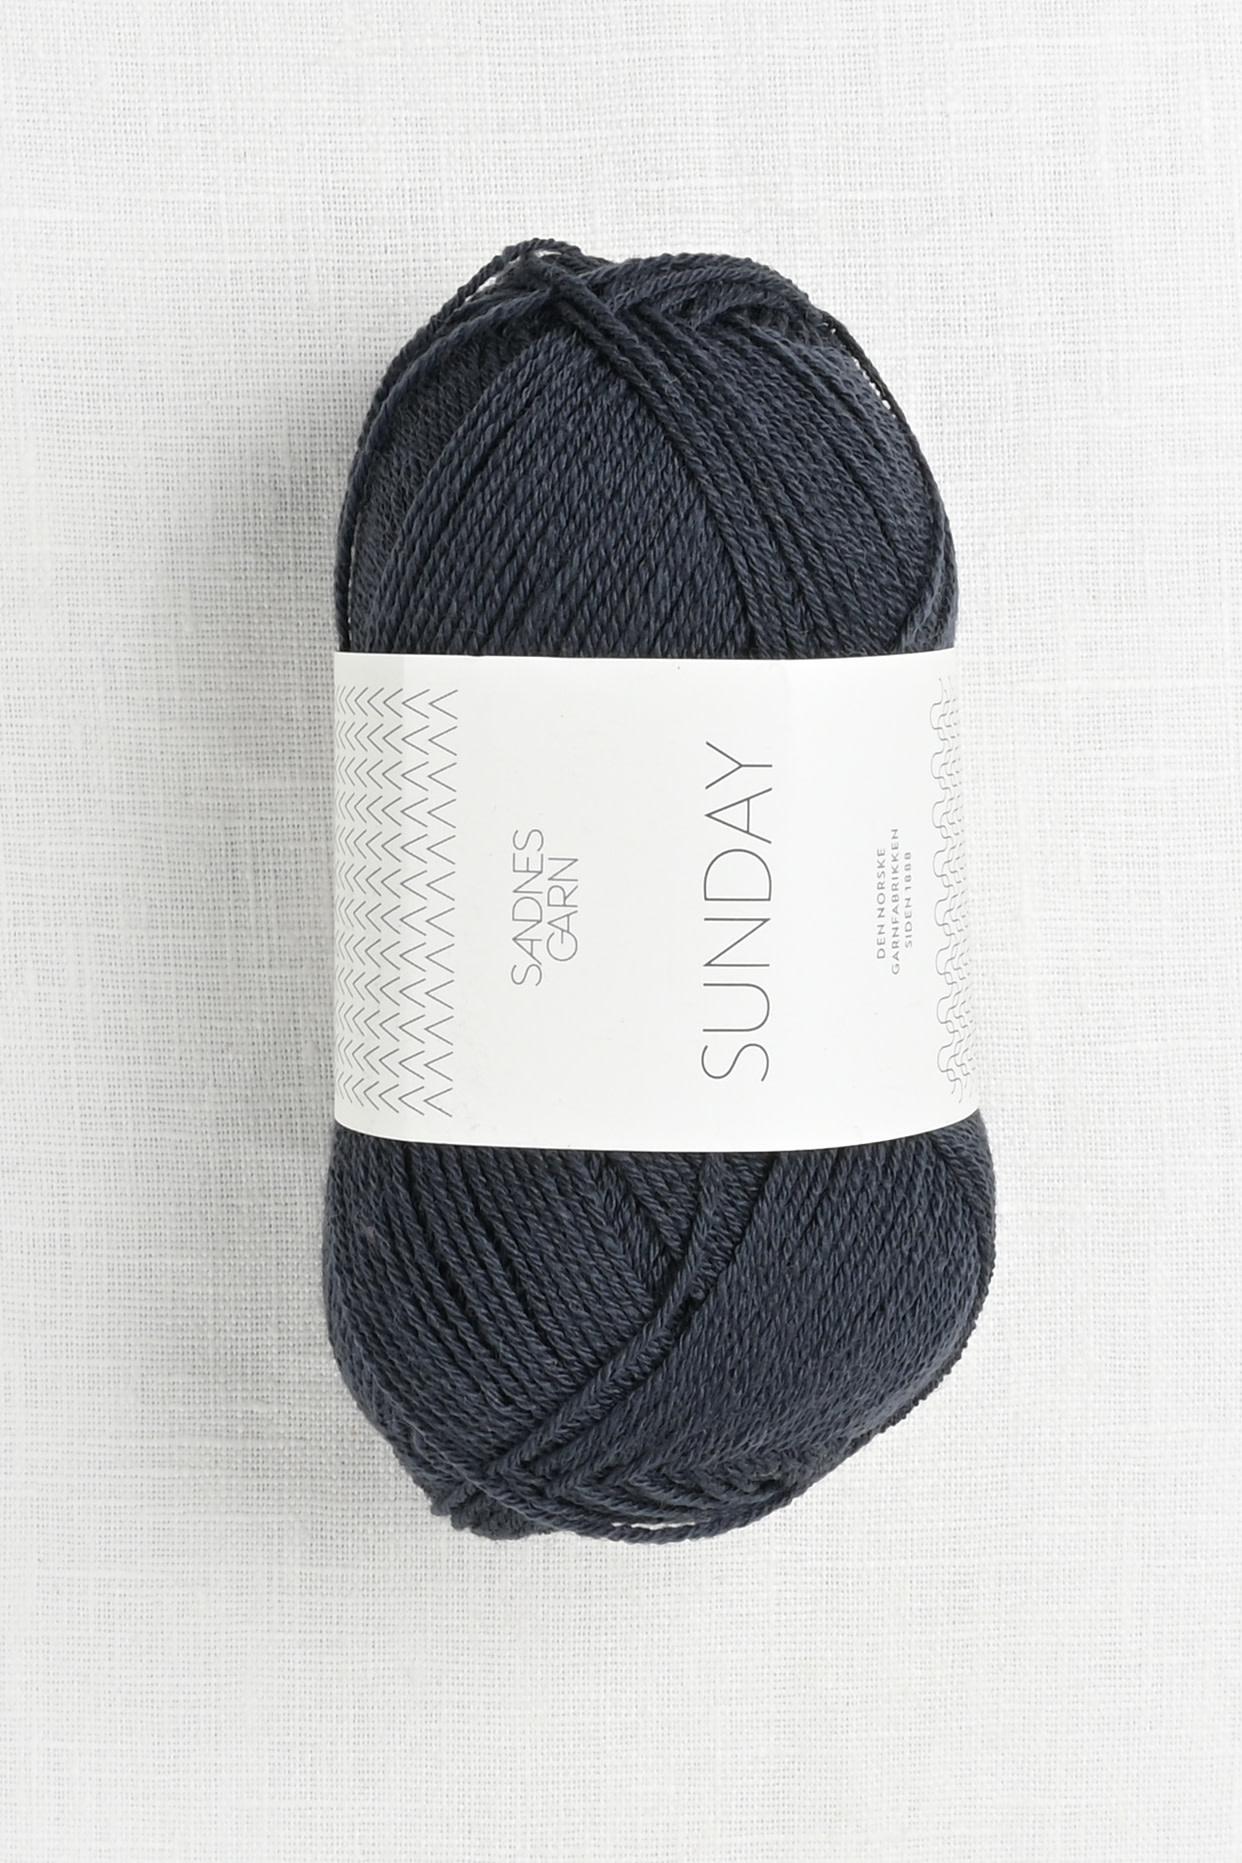 Sandnes Garn Sunday 6581 Dark Gray Blue - Wool and Company Yarn